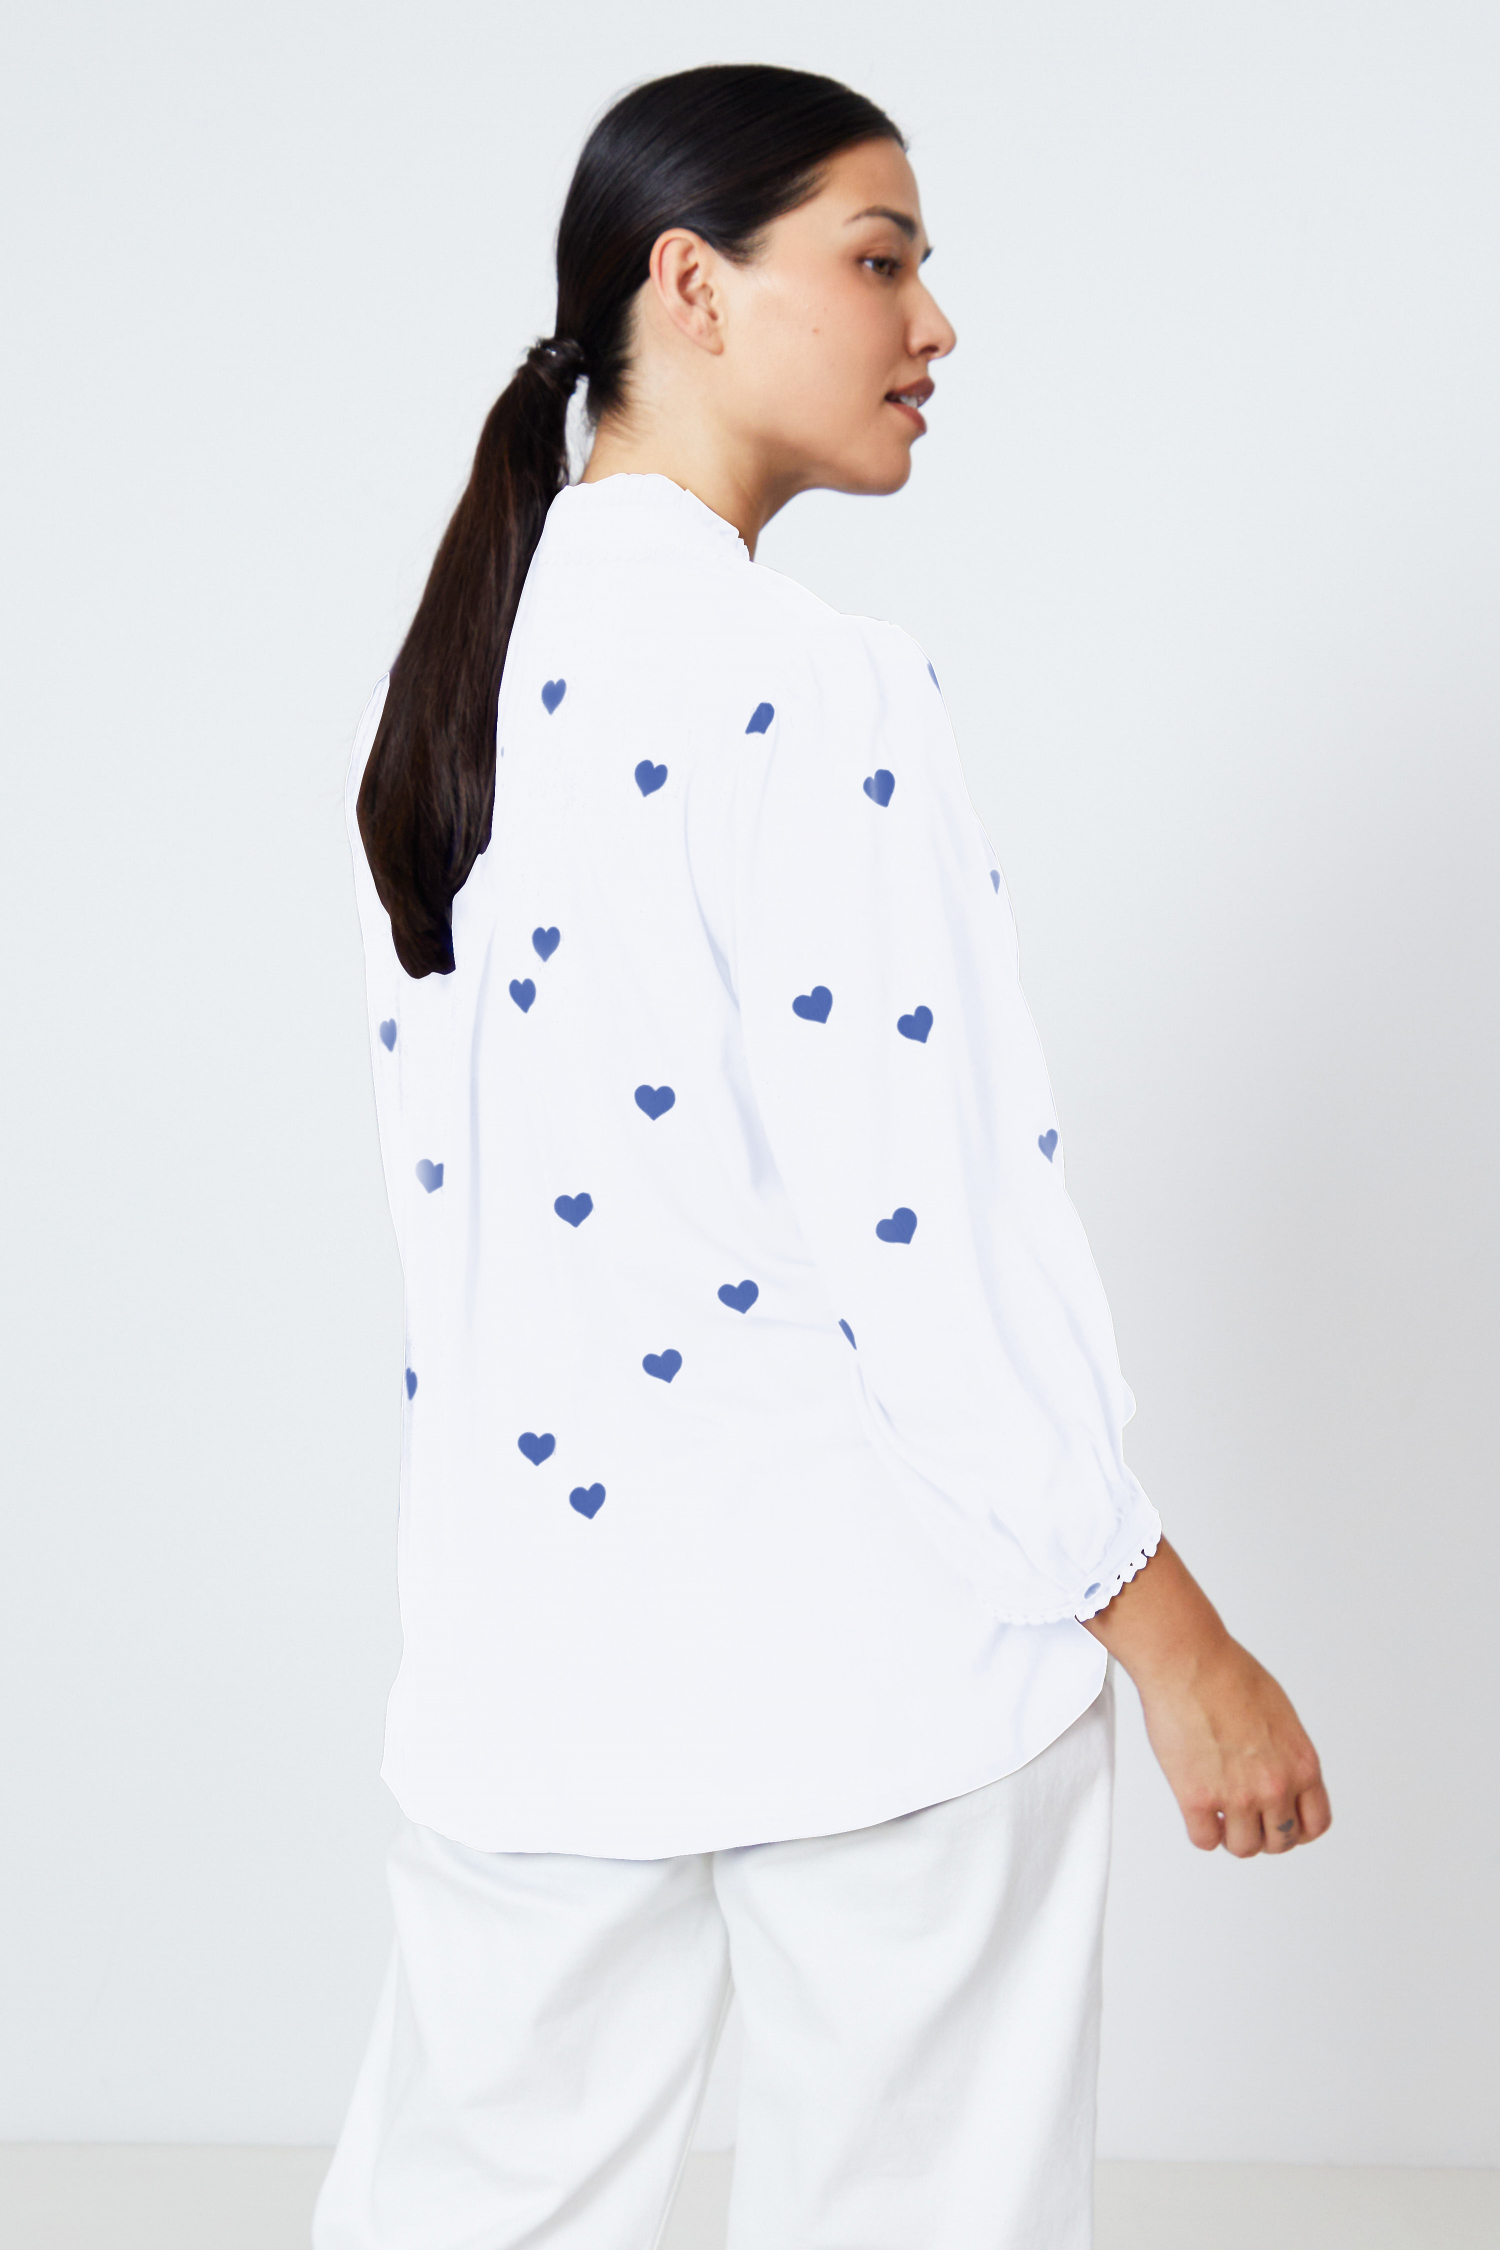 plain shirt with screen-printed heart